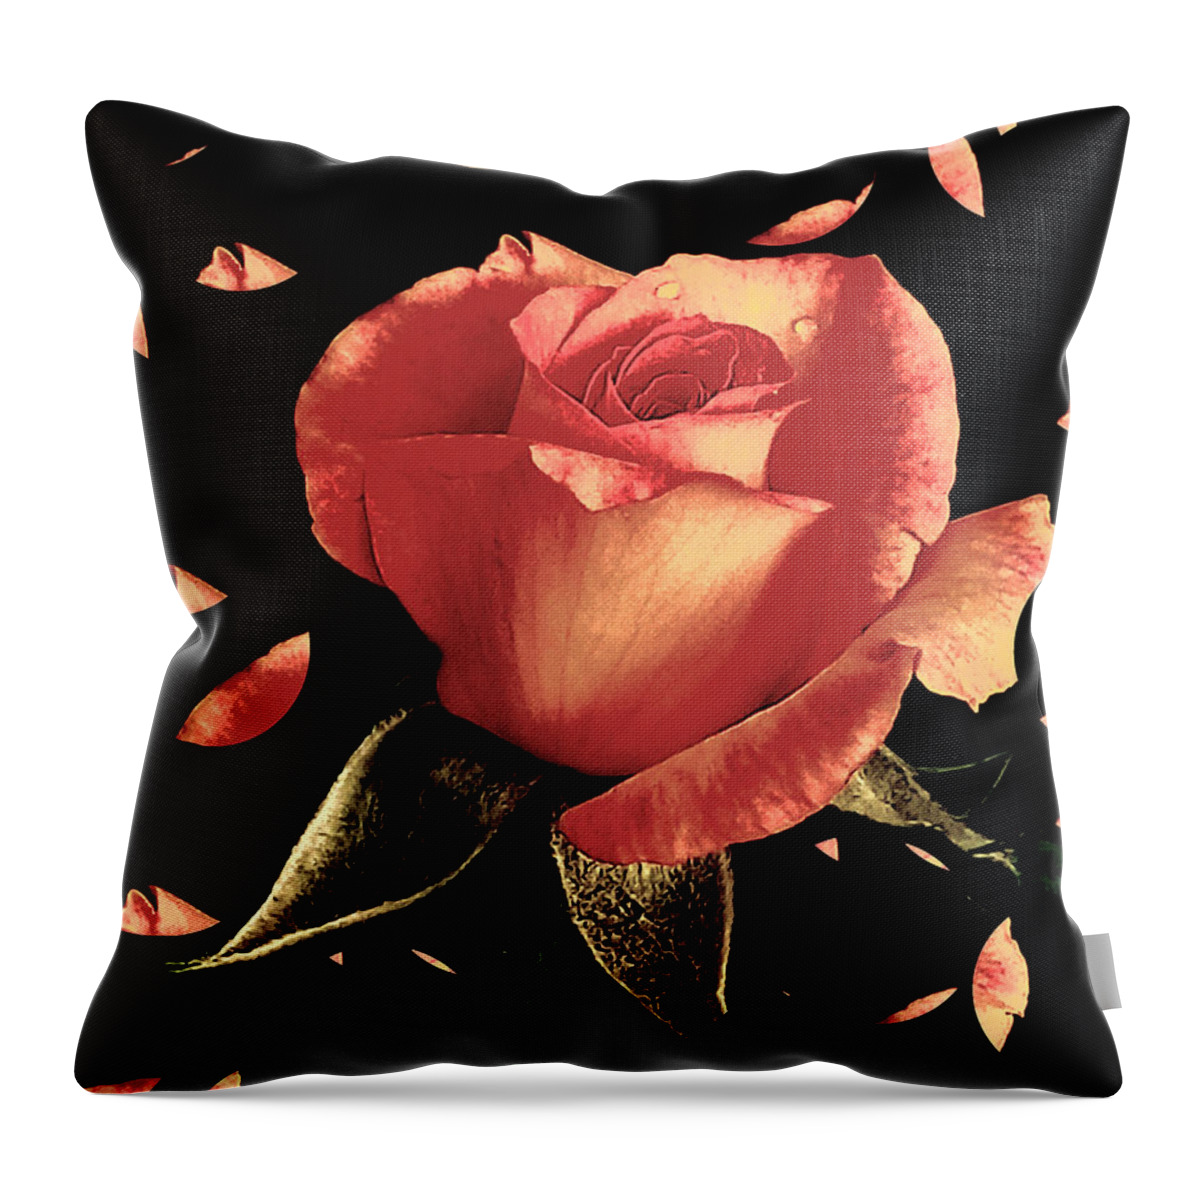 Rose Throw Pillow featuring the digital art Rose Petals by Dani McEvoy